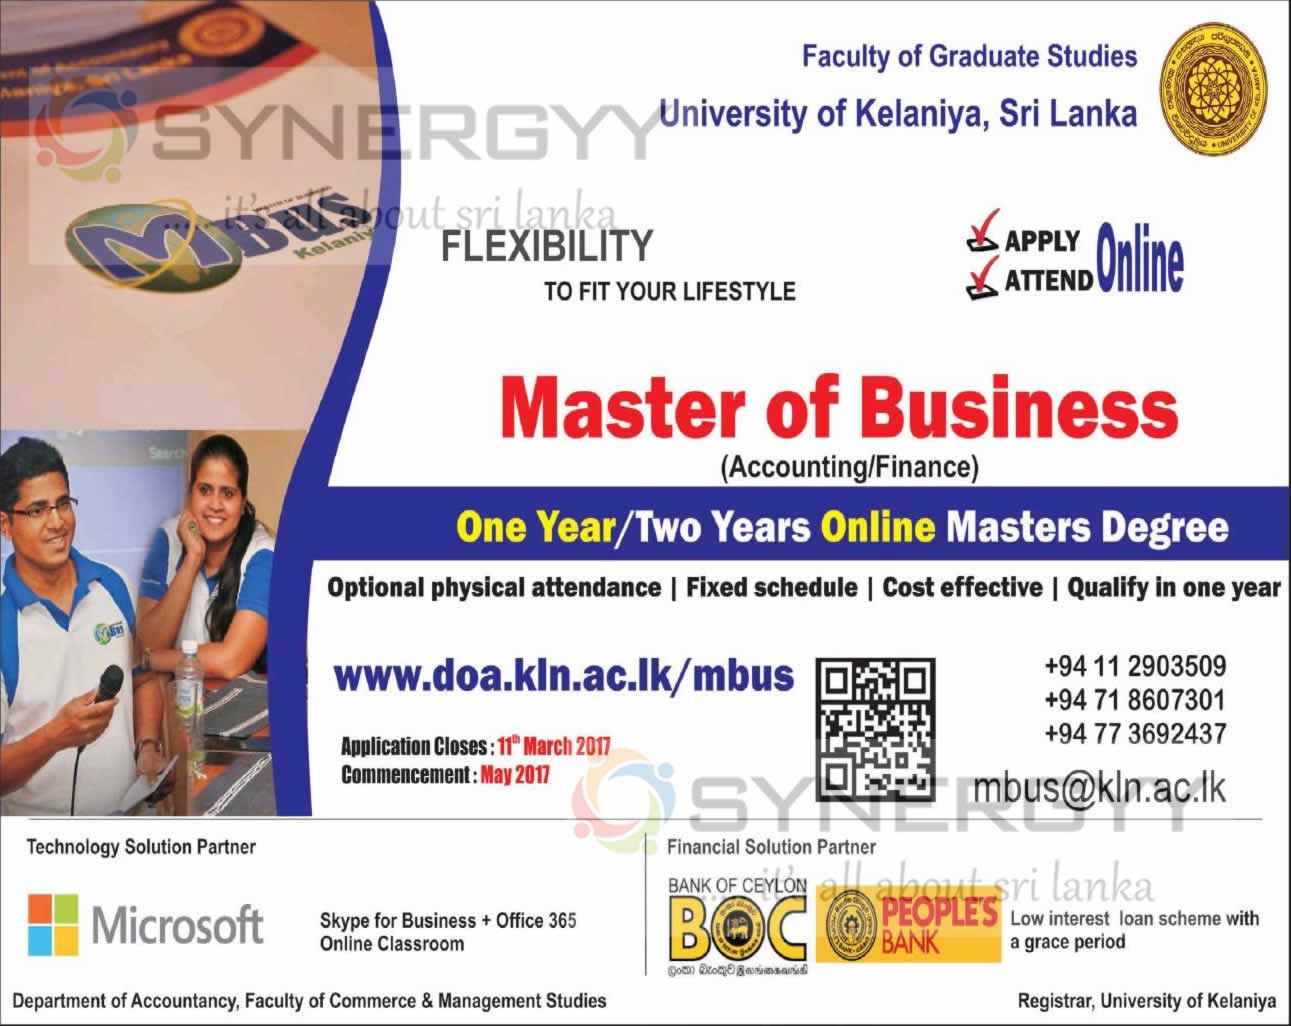 Master of Business (Accounting /Finance) Online degree by University of Kelaniya